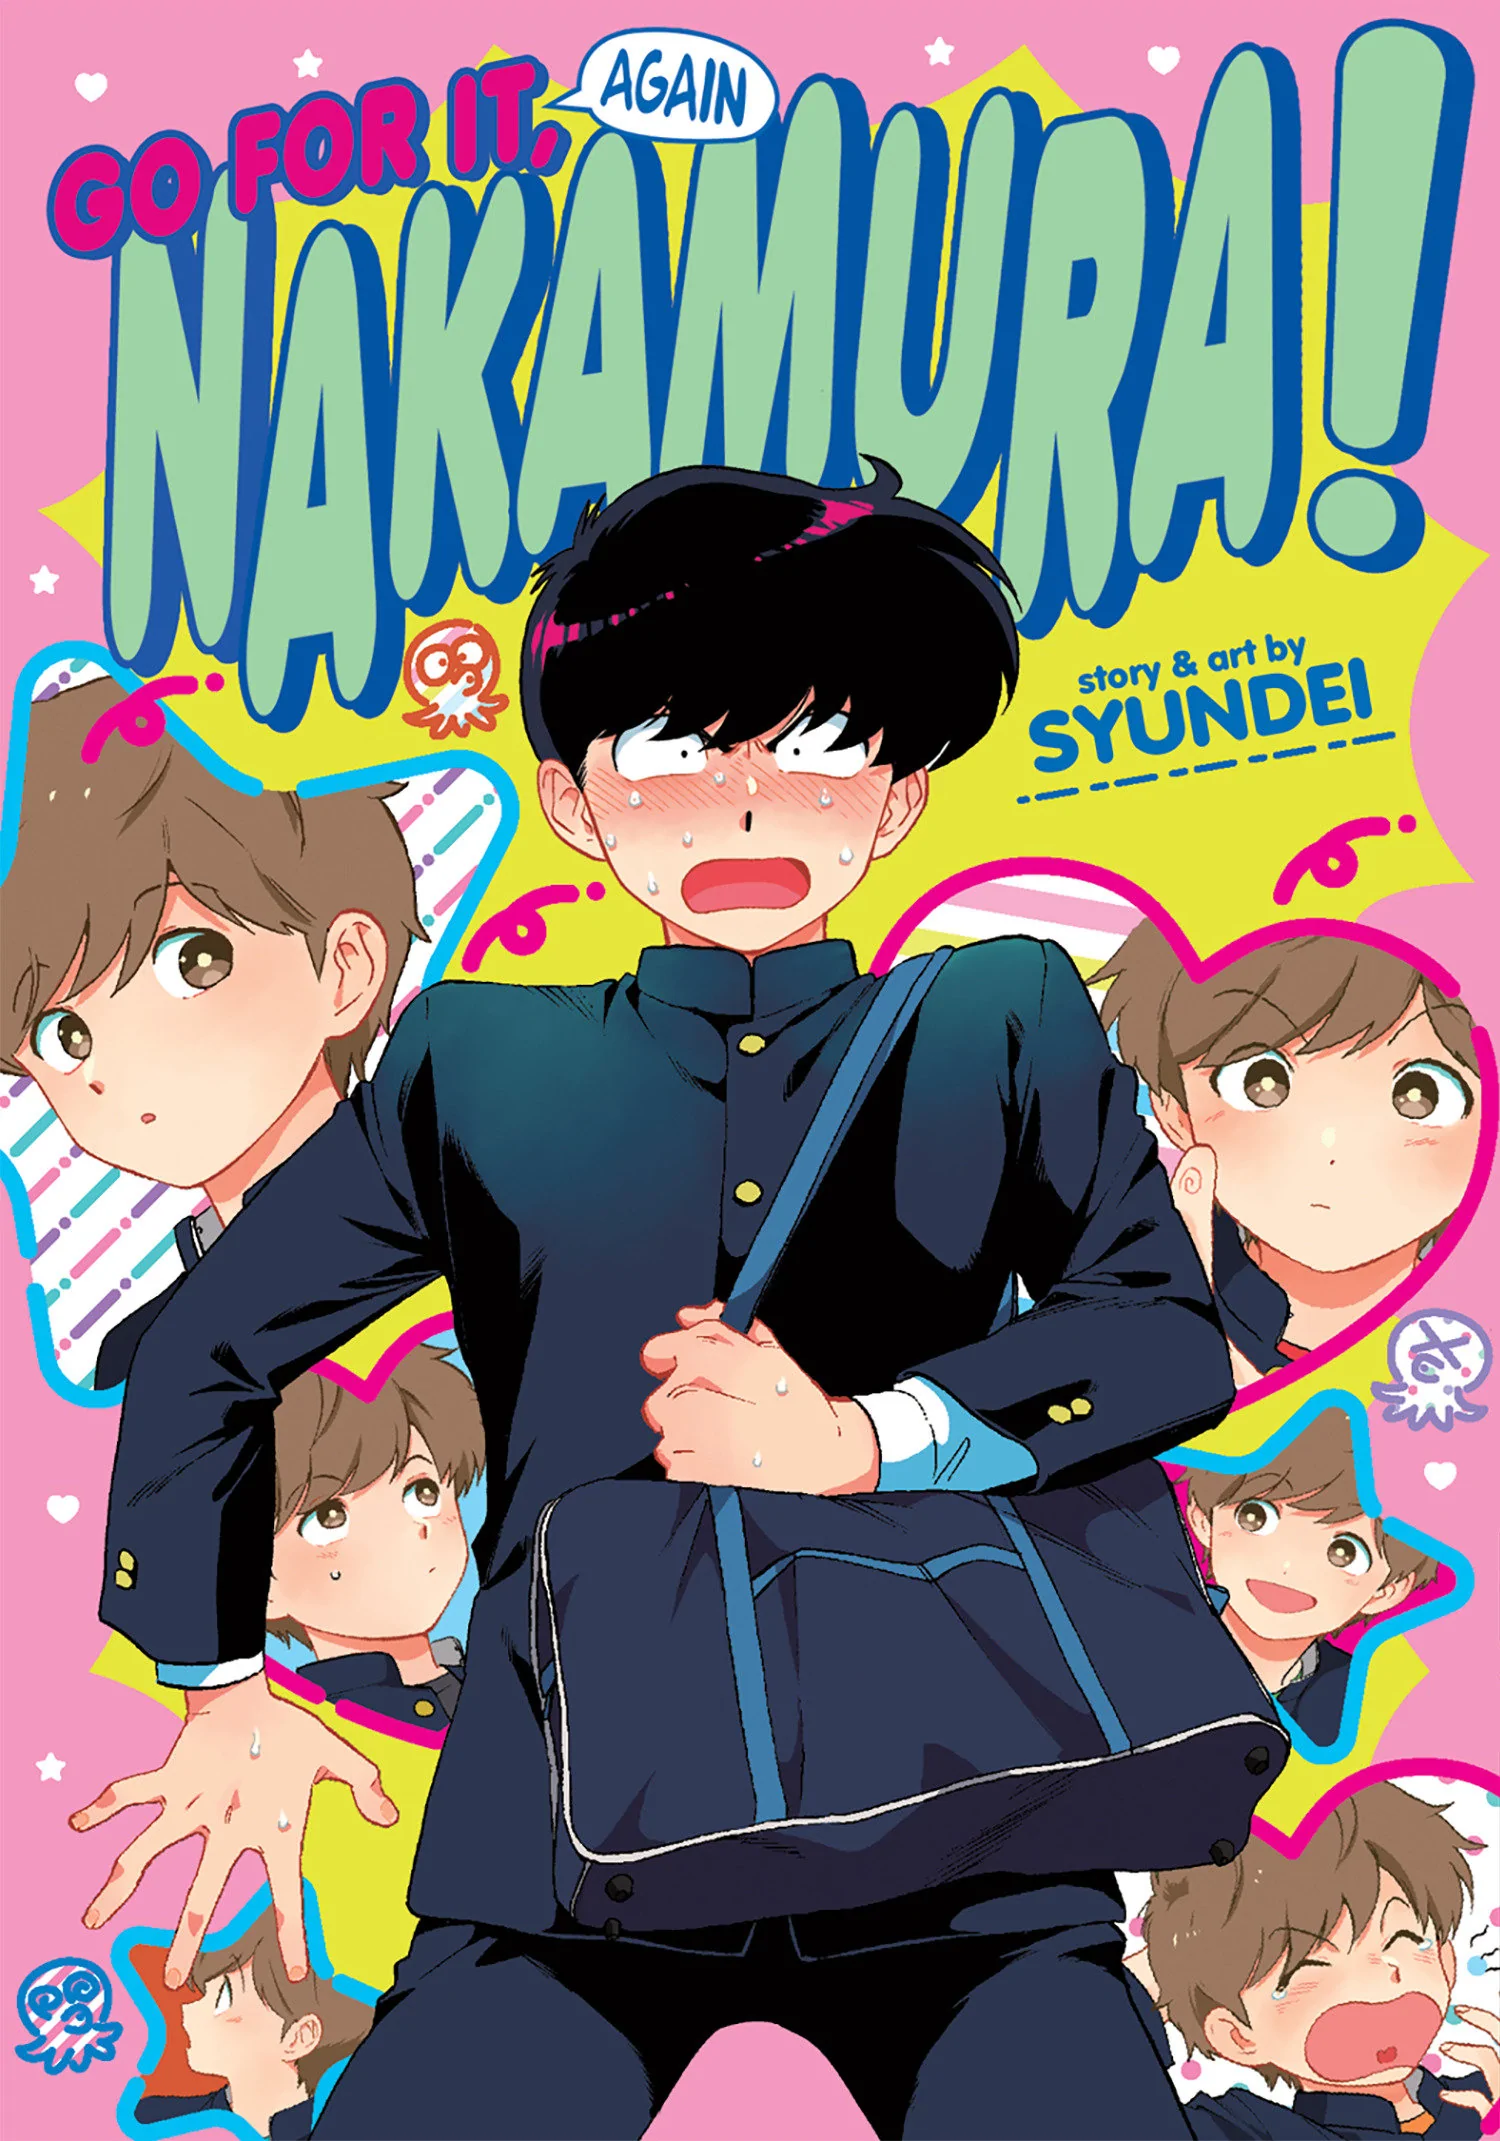 animate】(Drama CD) Go For It, Nakamura! Audio Drama【official, nakamura anime  - thirstymag.com